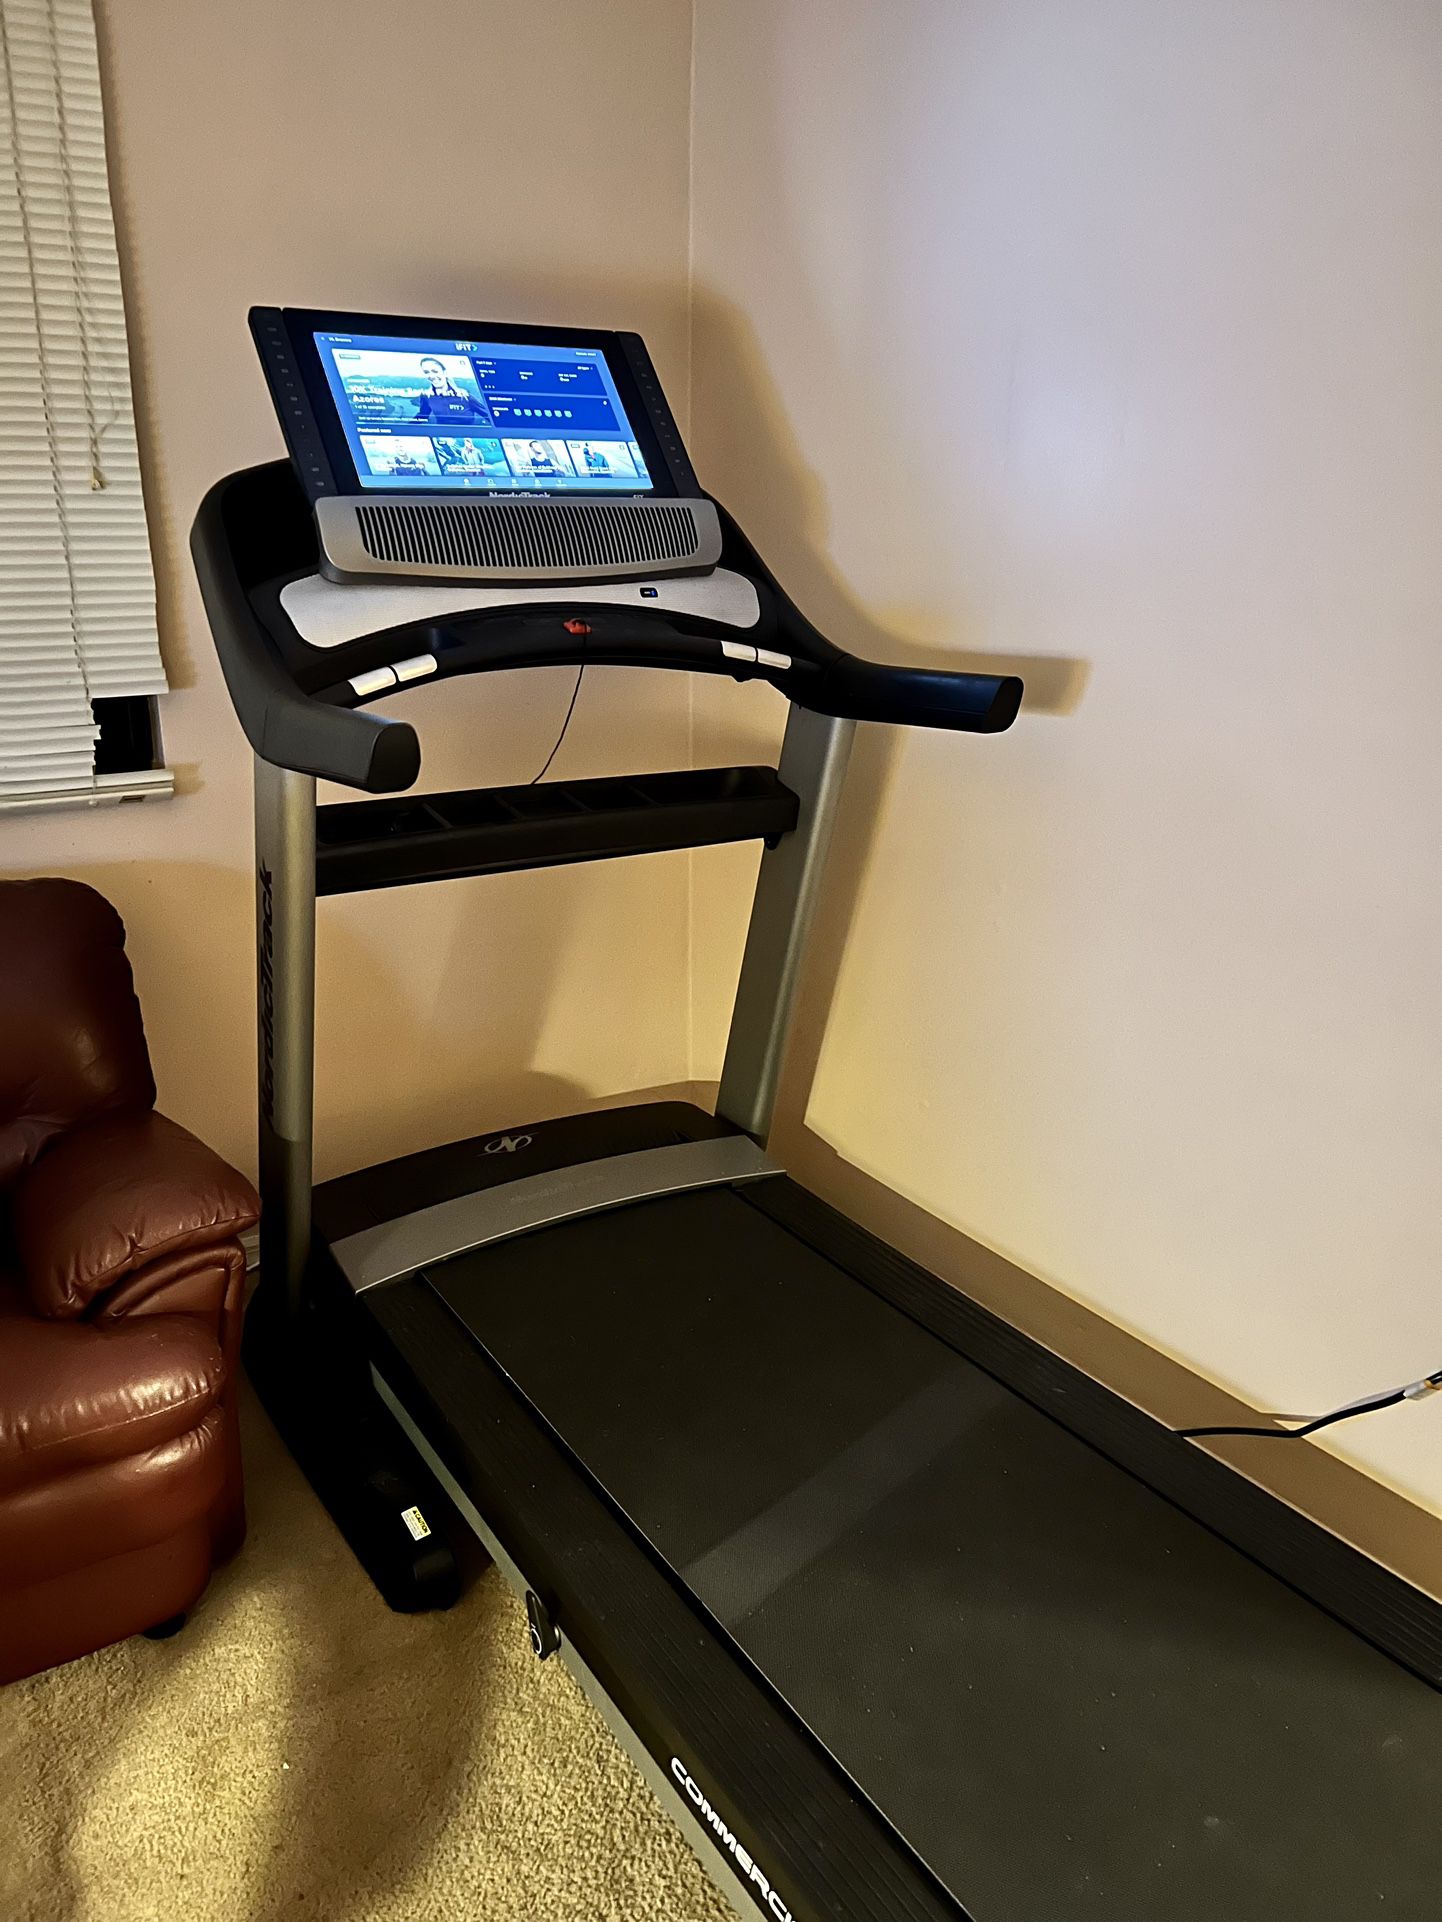 NordicTrack Treadmill (Commercial 2950)